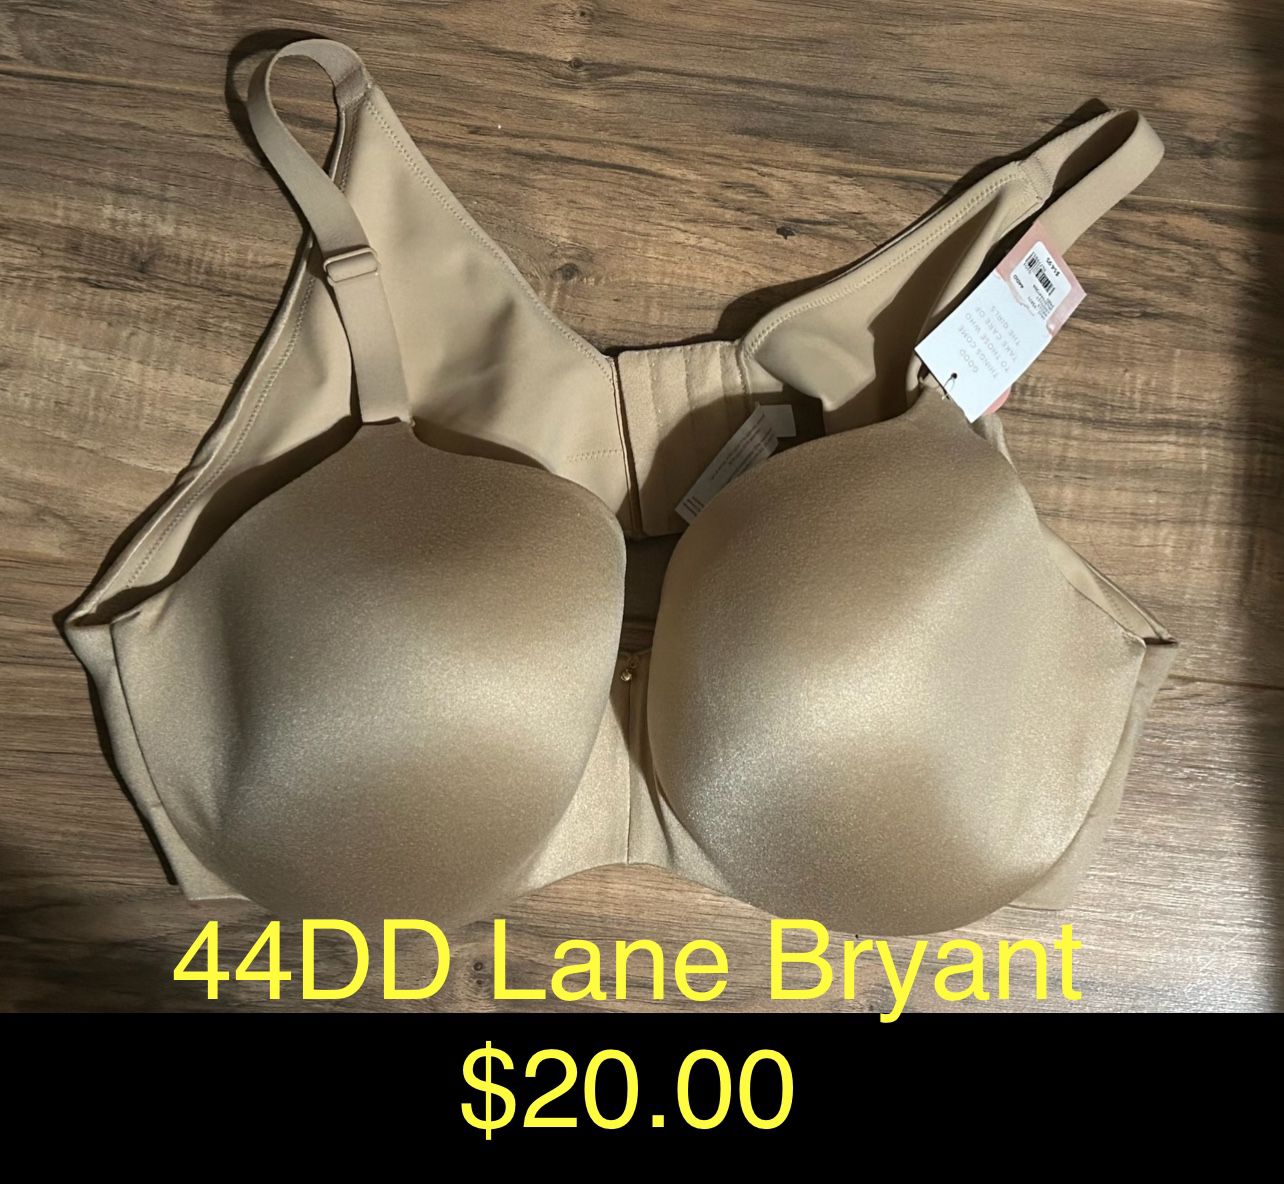 Lane Bryant Cacique 44DD Bra New